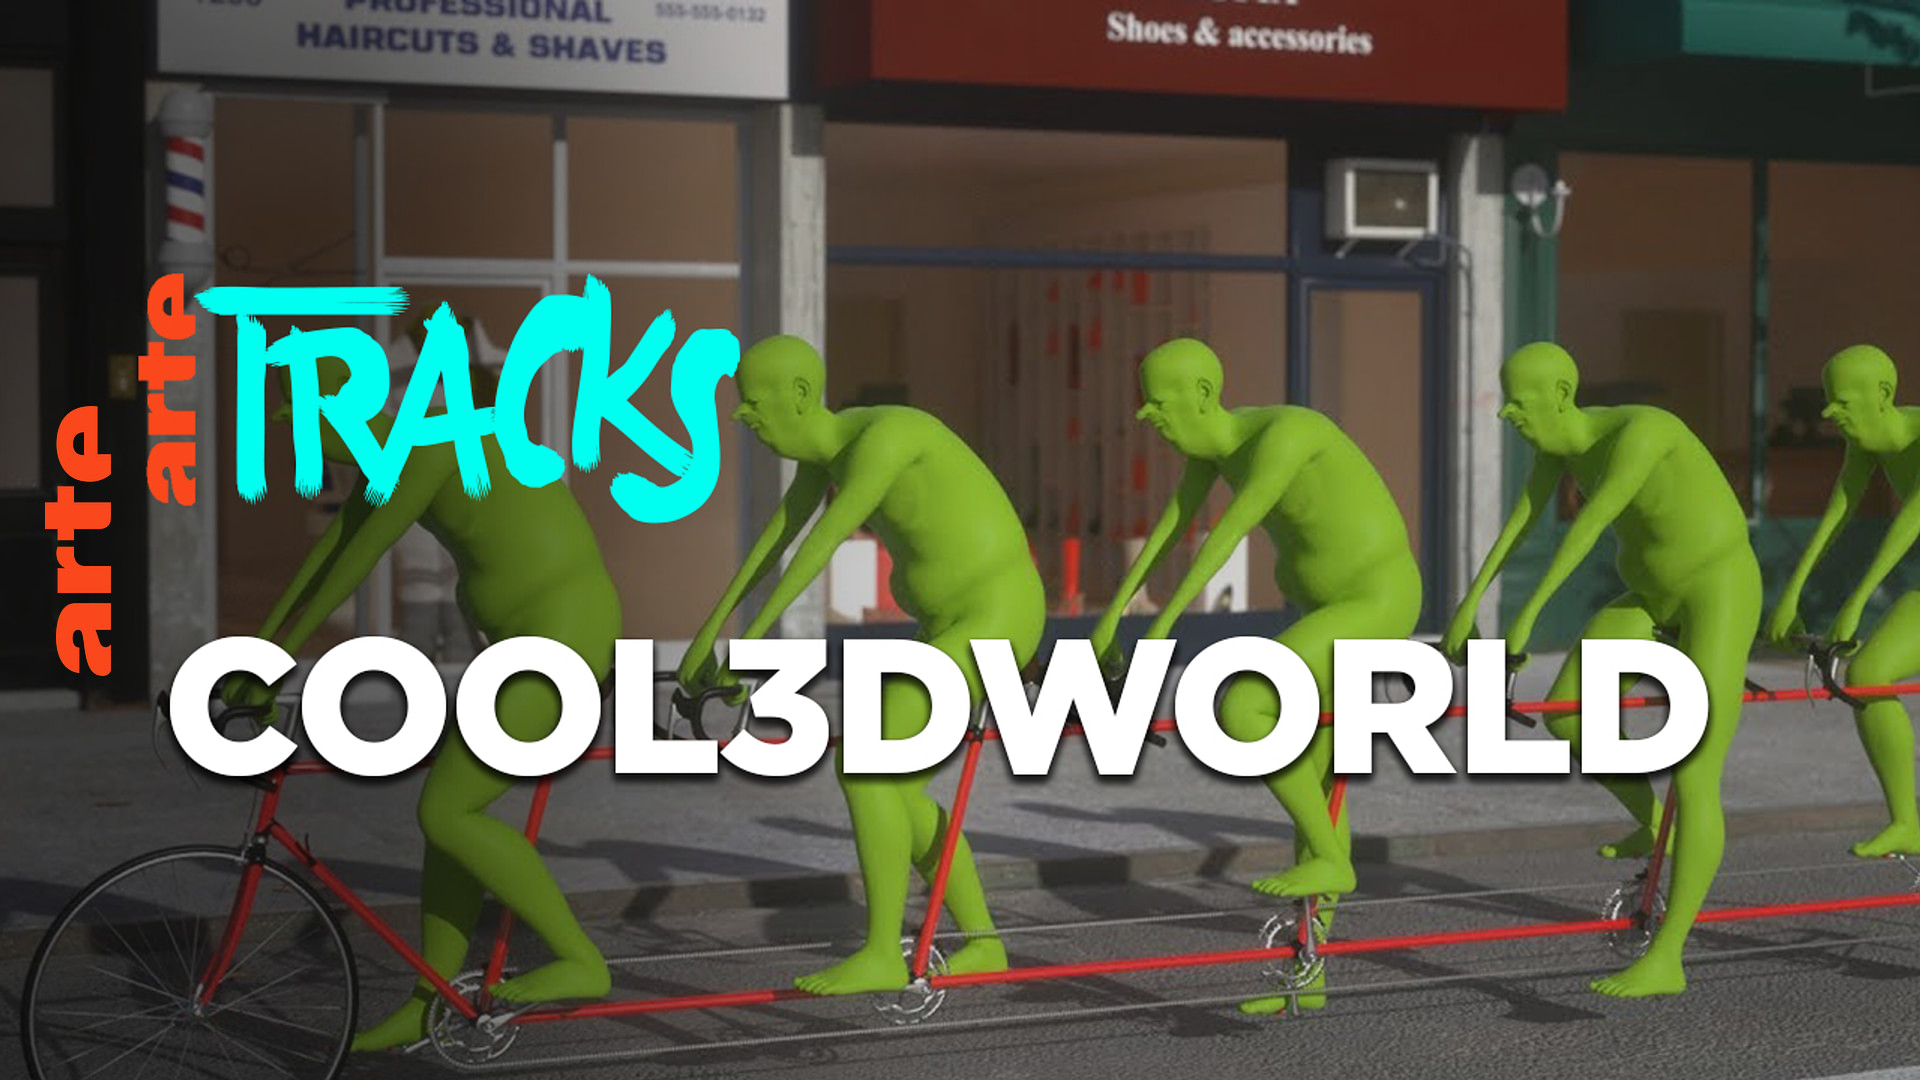 Cool3Dworld | TRACKS